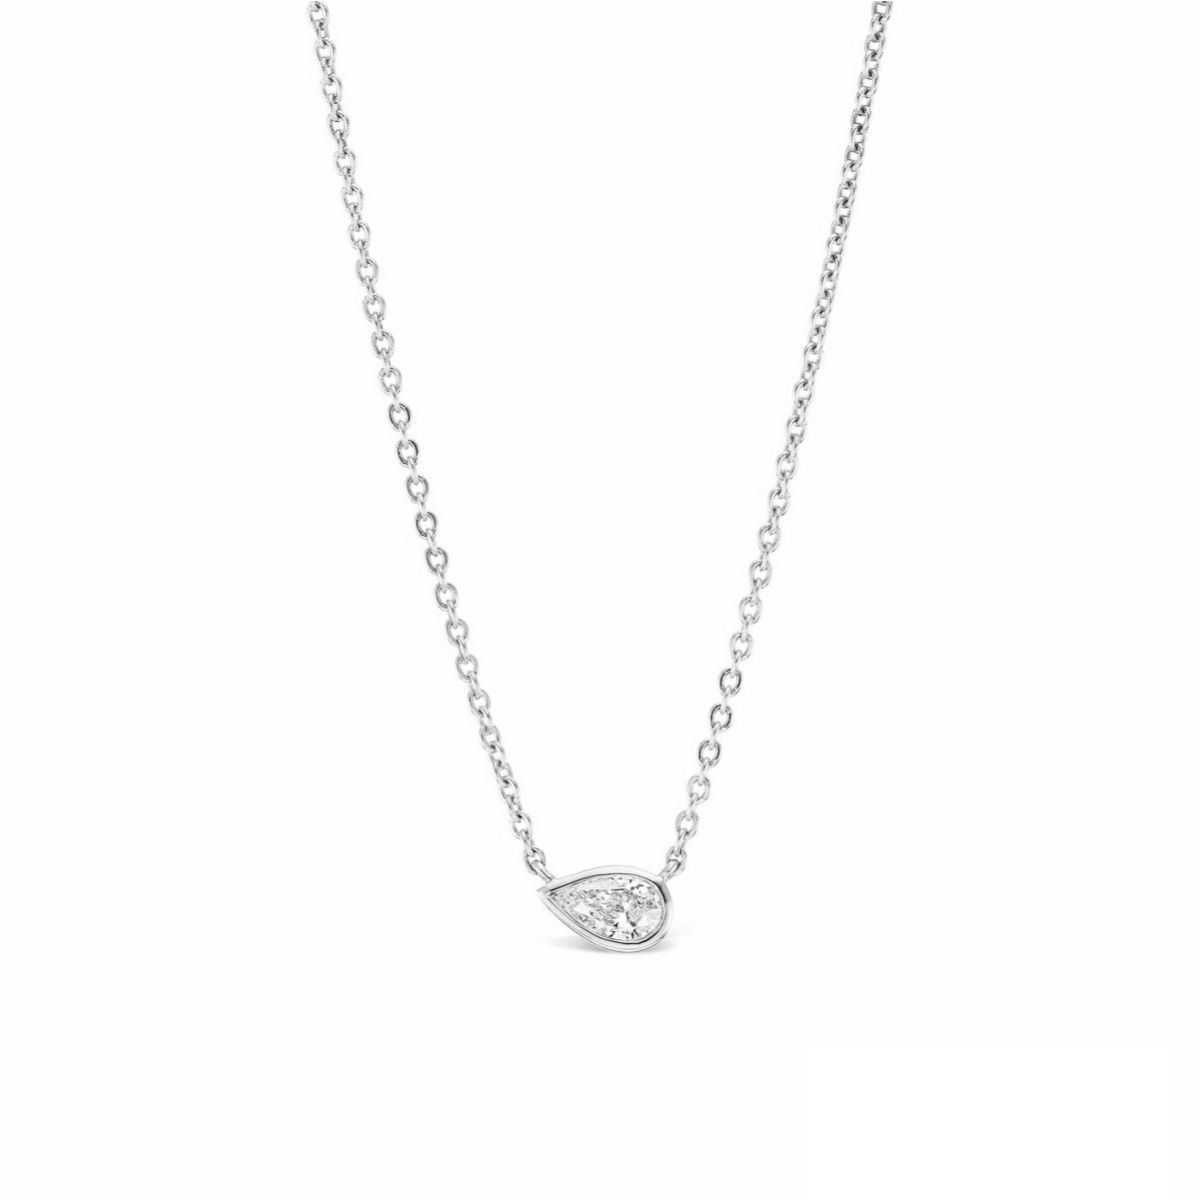 14K Gold Diamond Pear Shape Bezel Pendant